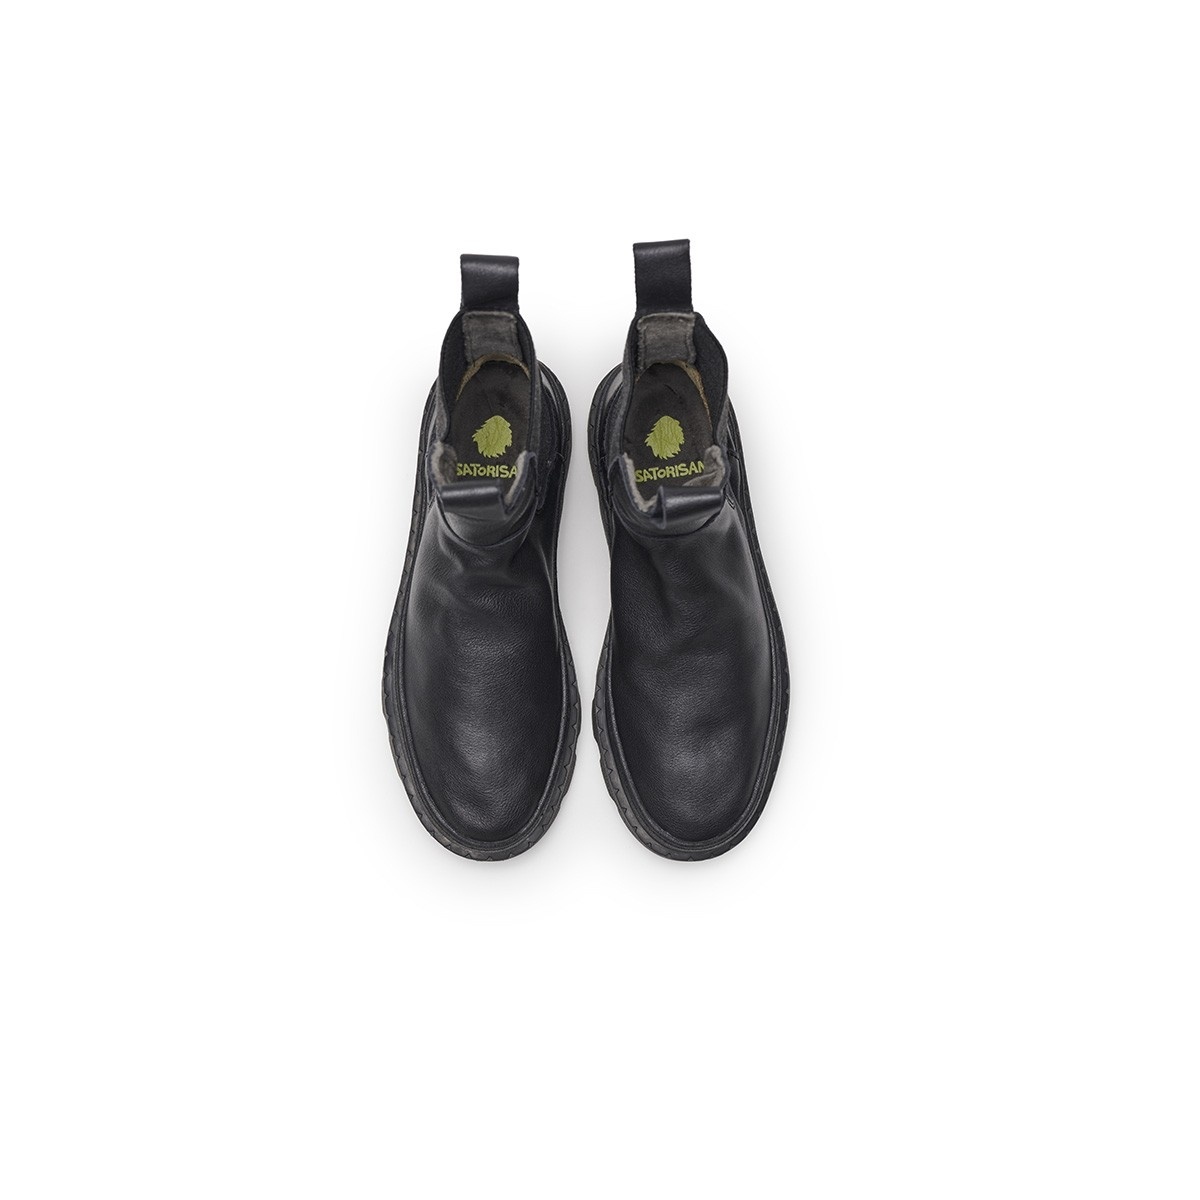 Ботинки Satorisan Unalome Elastics Premium Black фото 4